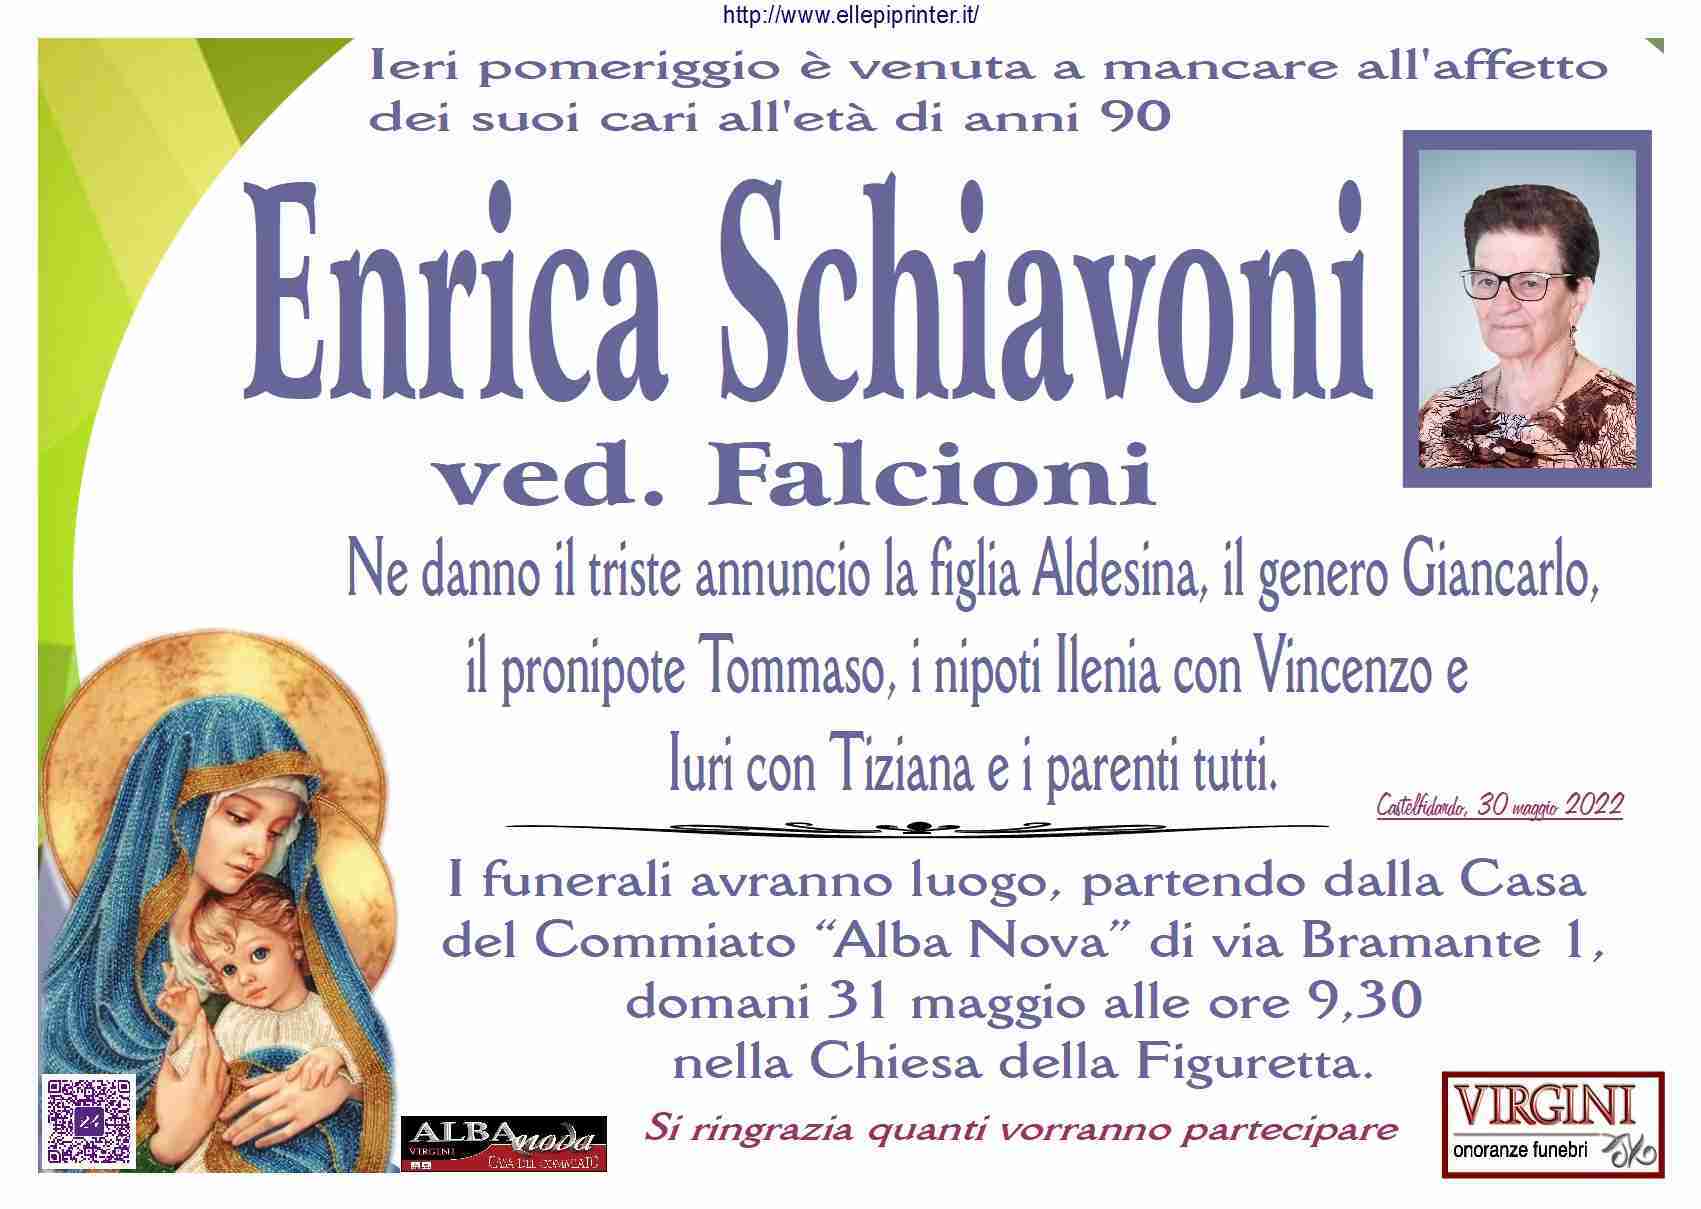 Enrica Schiavoni